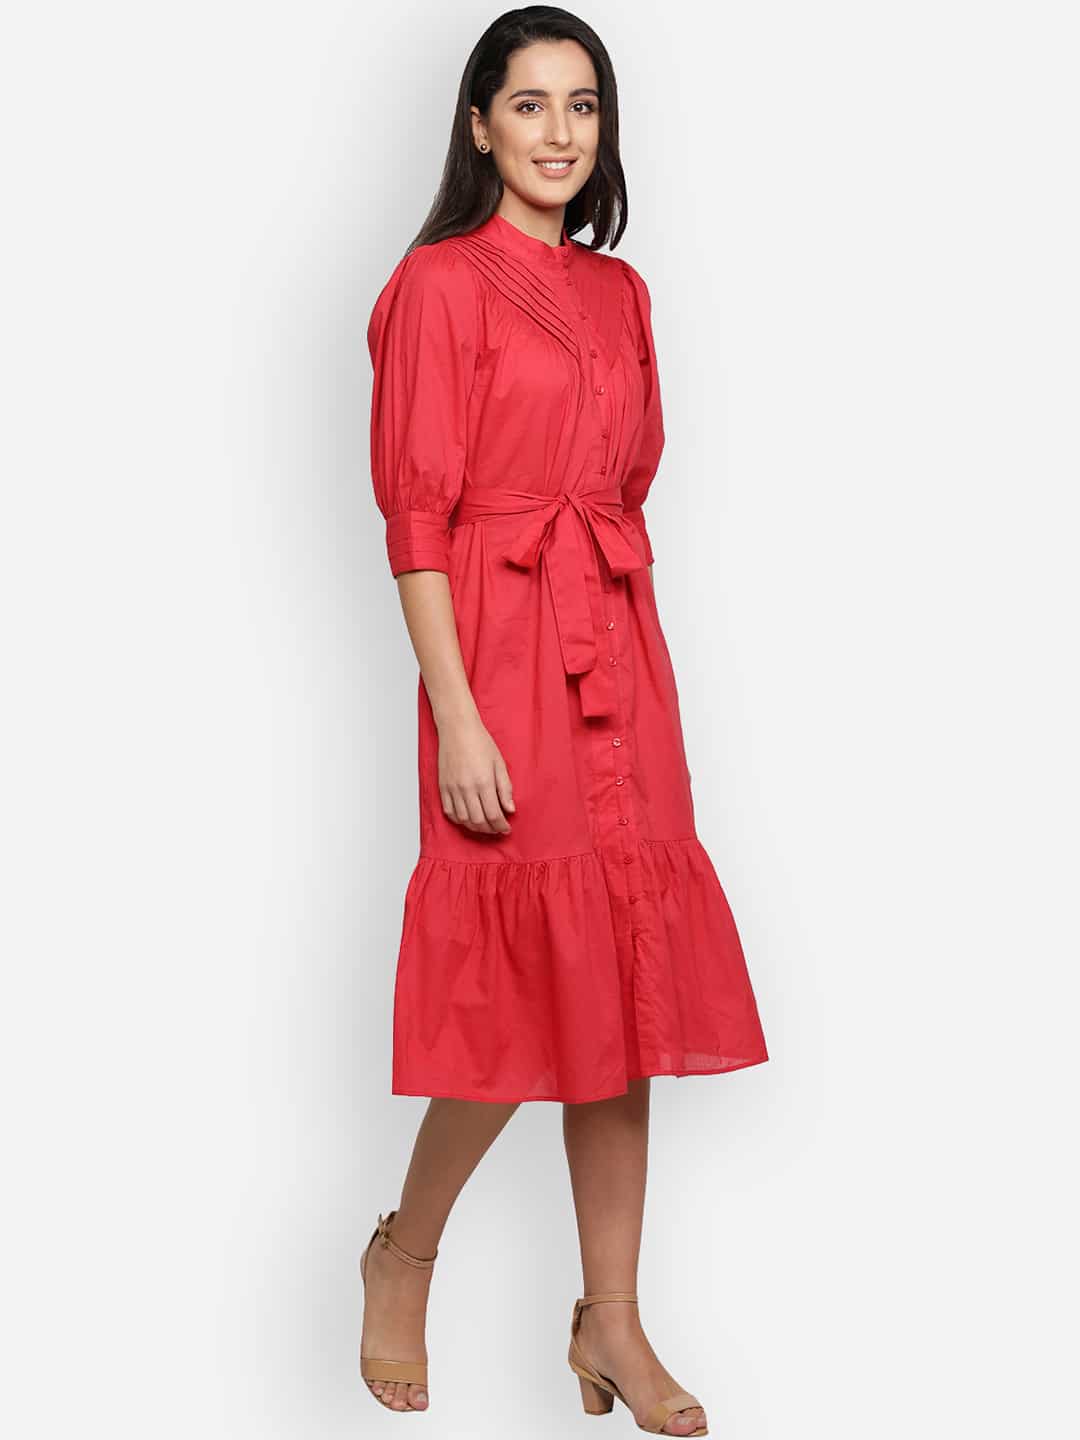 Blanc9 Red Pleated Dress-B9DR68R